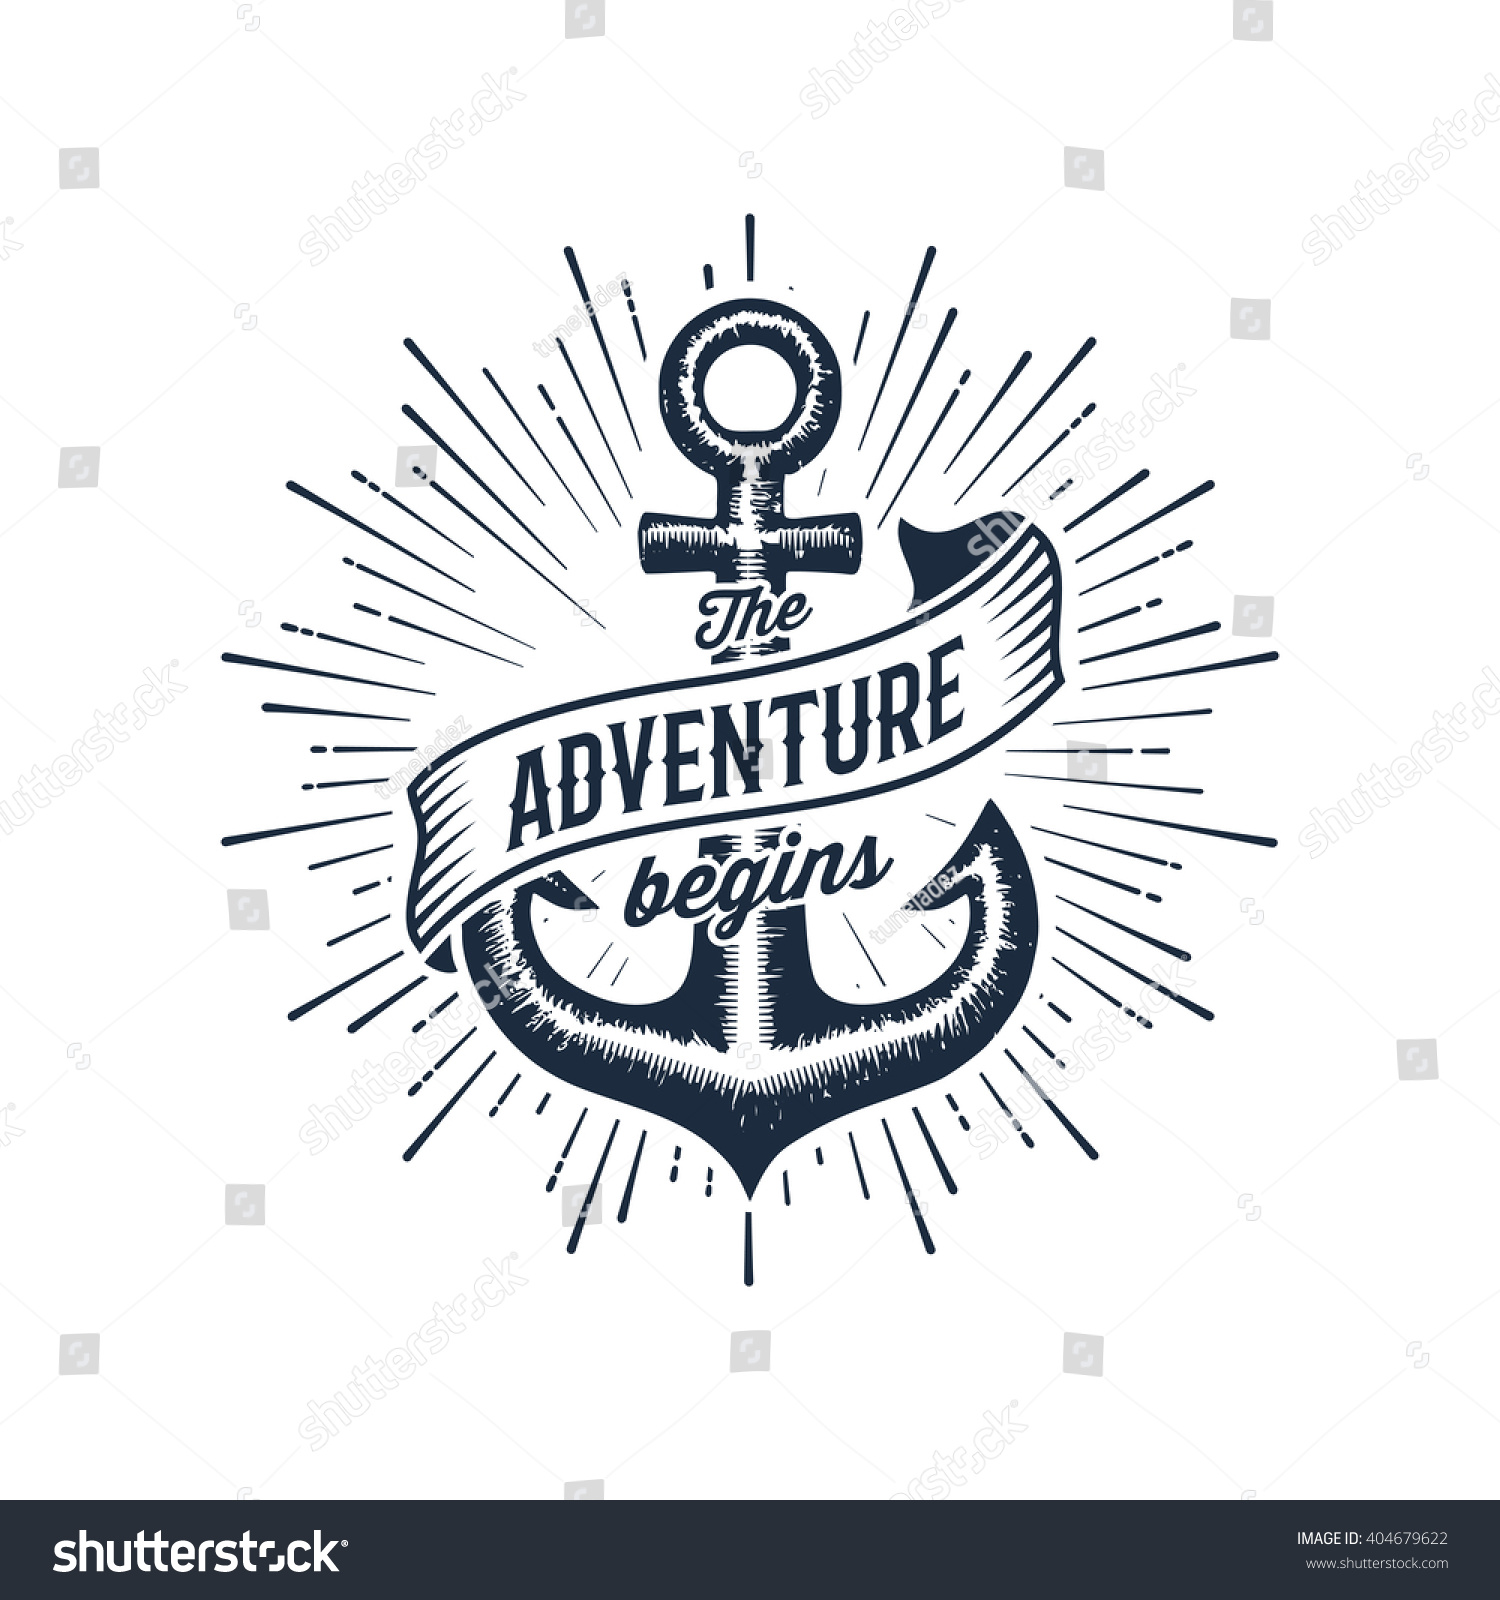 SVG of Vintage label with an anchor and slogan 'The adventure begins'. Apparel t-shirt design. Vector illustration. svg